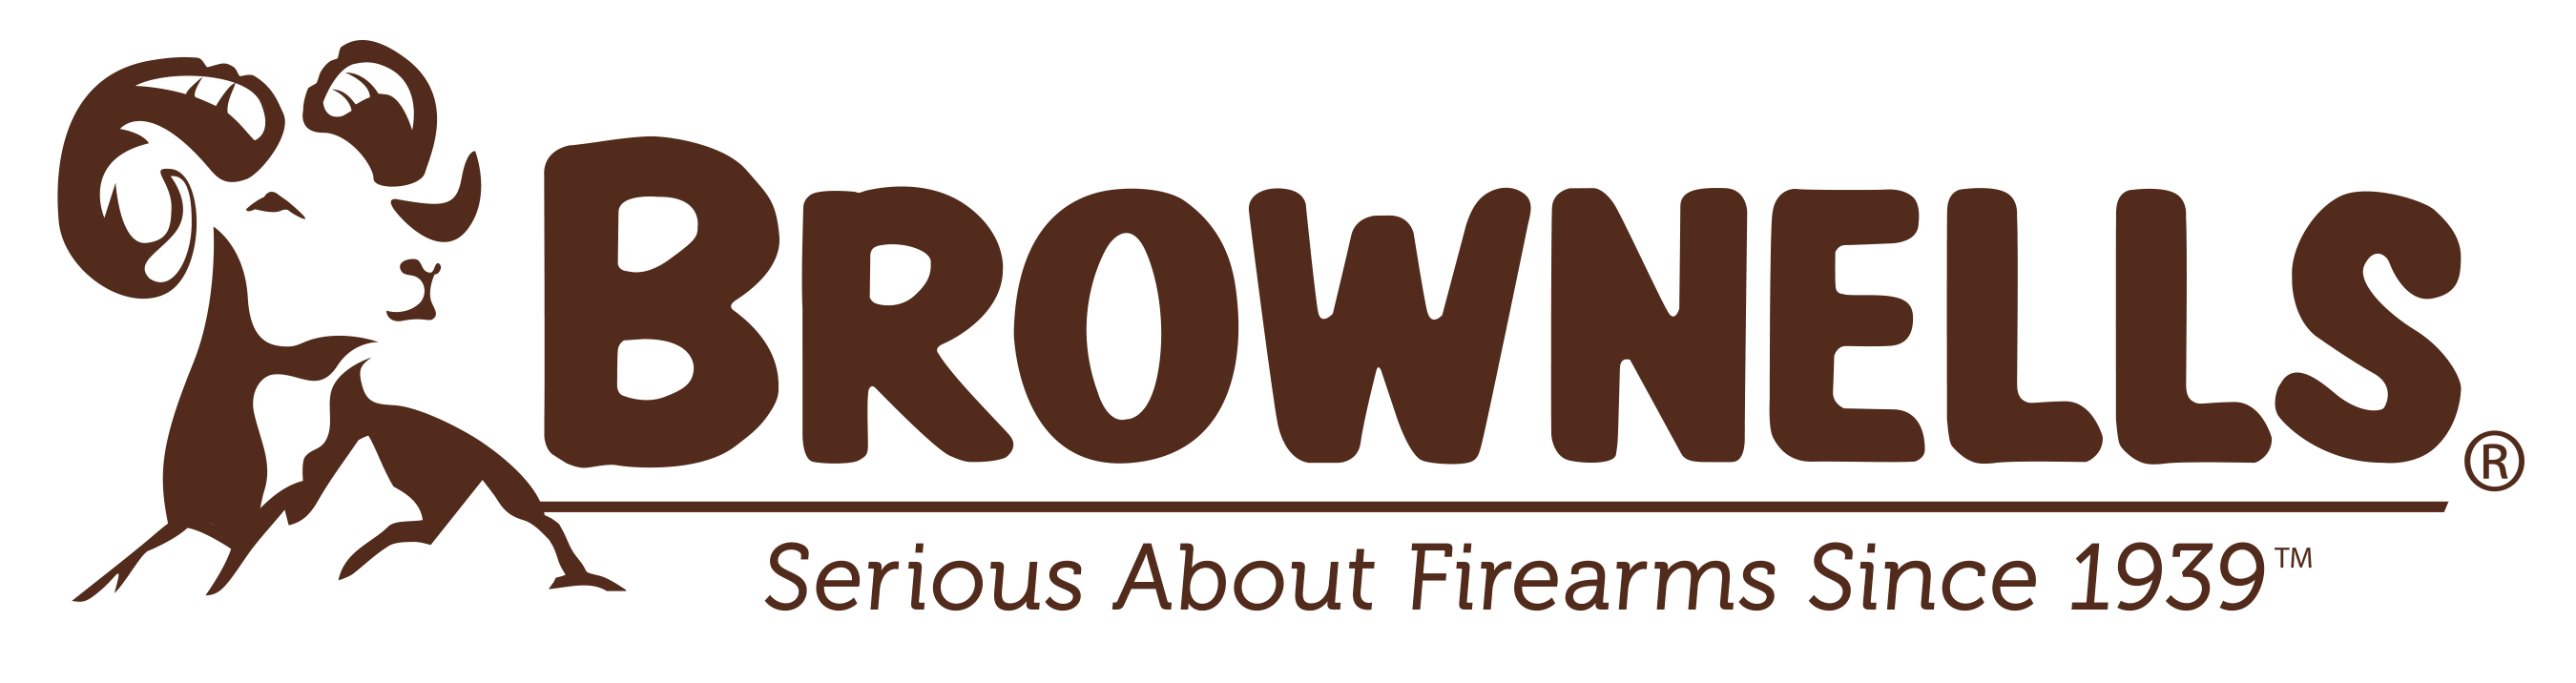 NEW_Brownells Logos